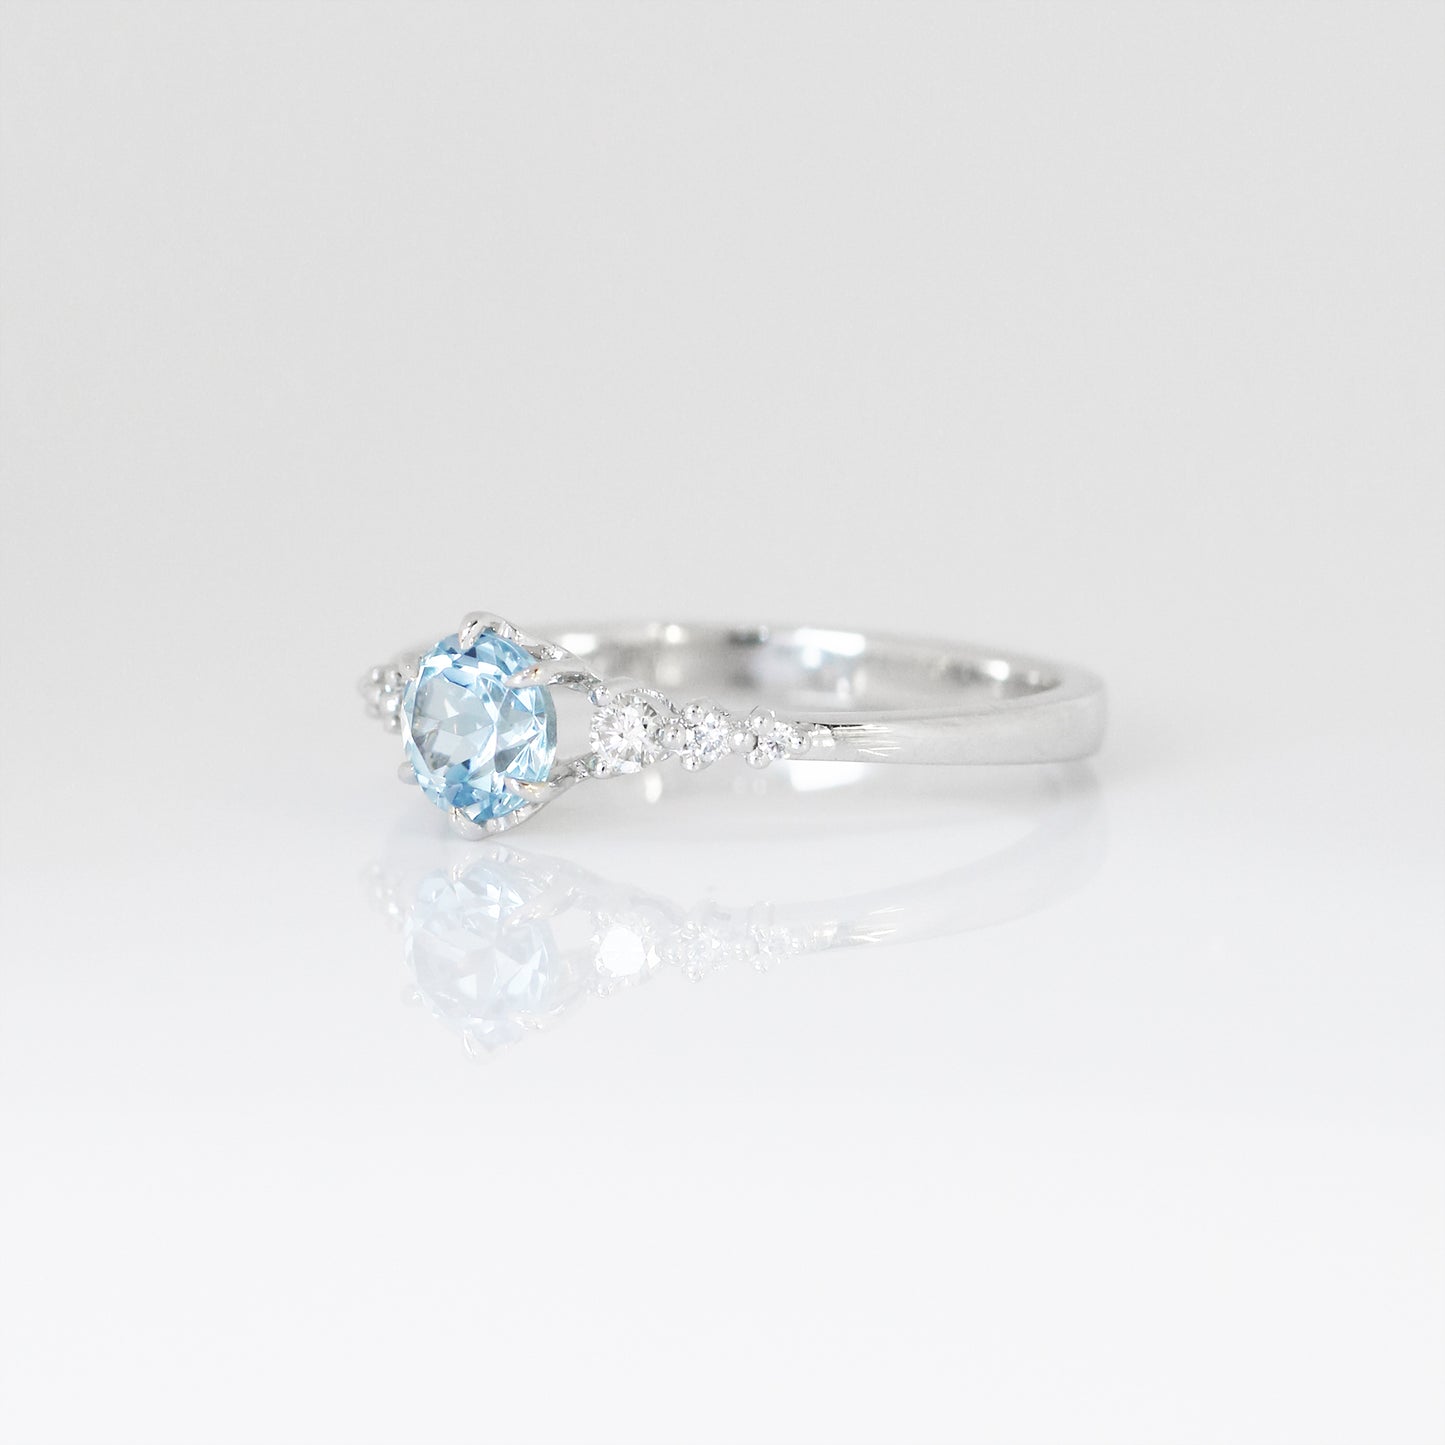 18k白金海藍寶鑽石戒指側面 18k White Gold Aquamarine Diamond Ring on side view